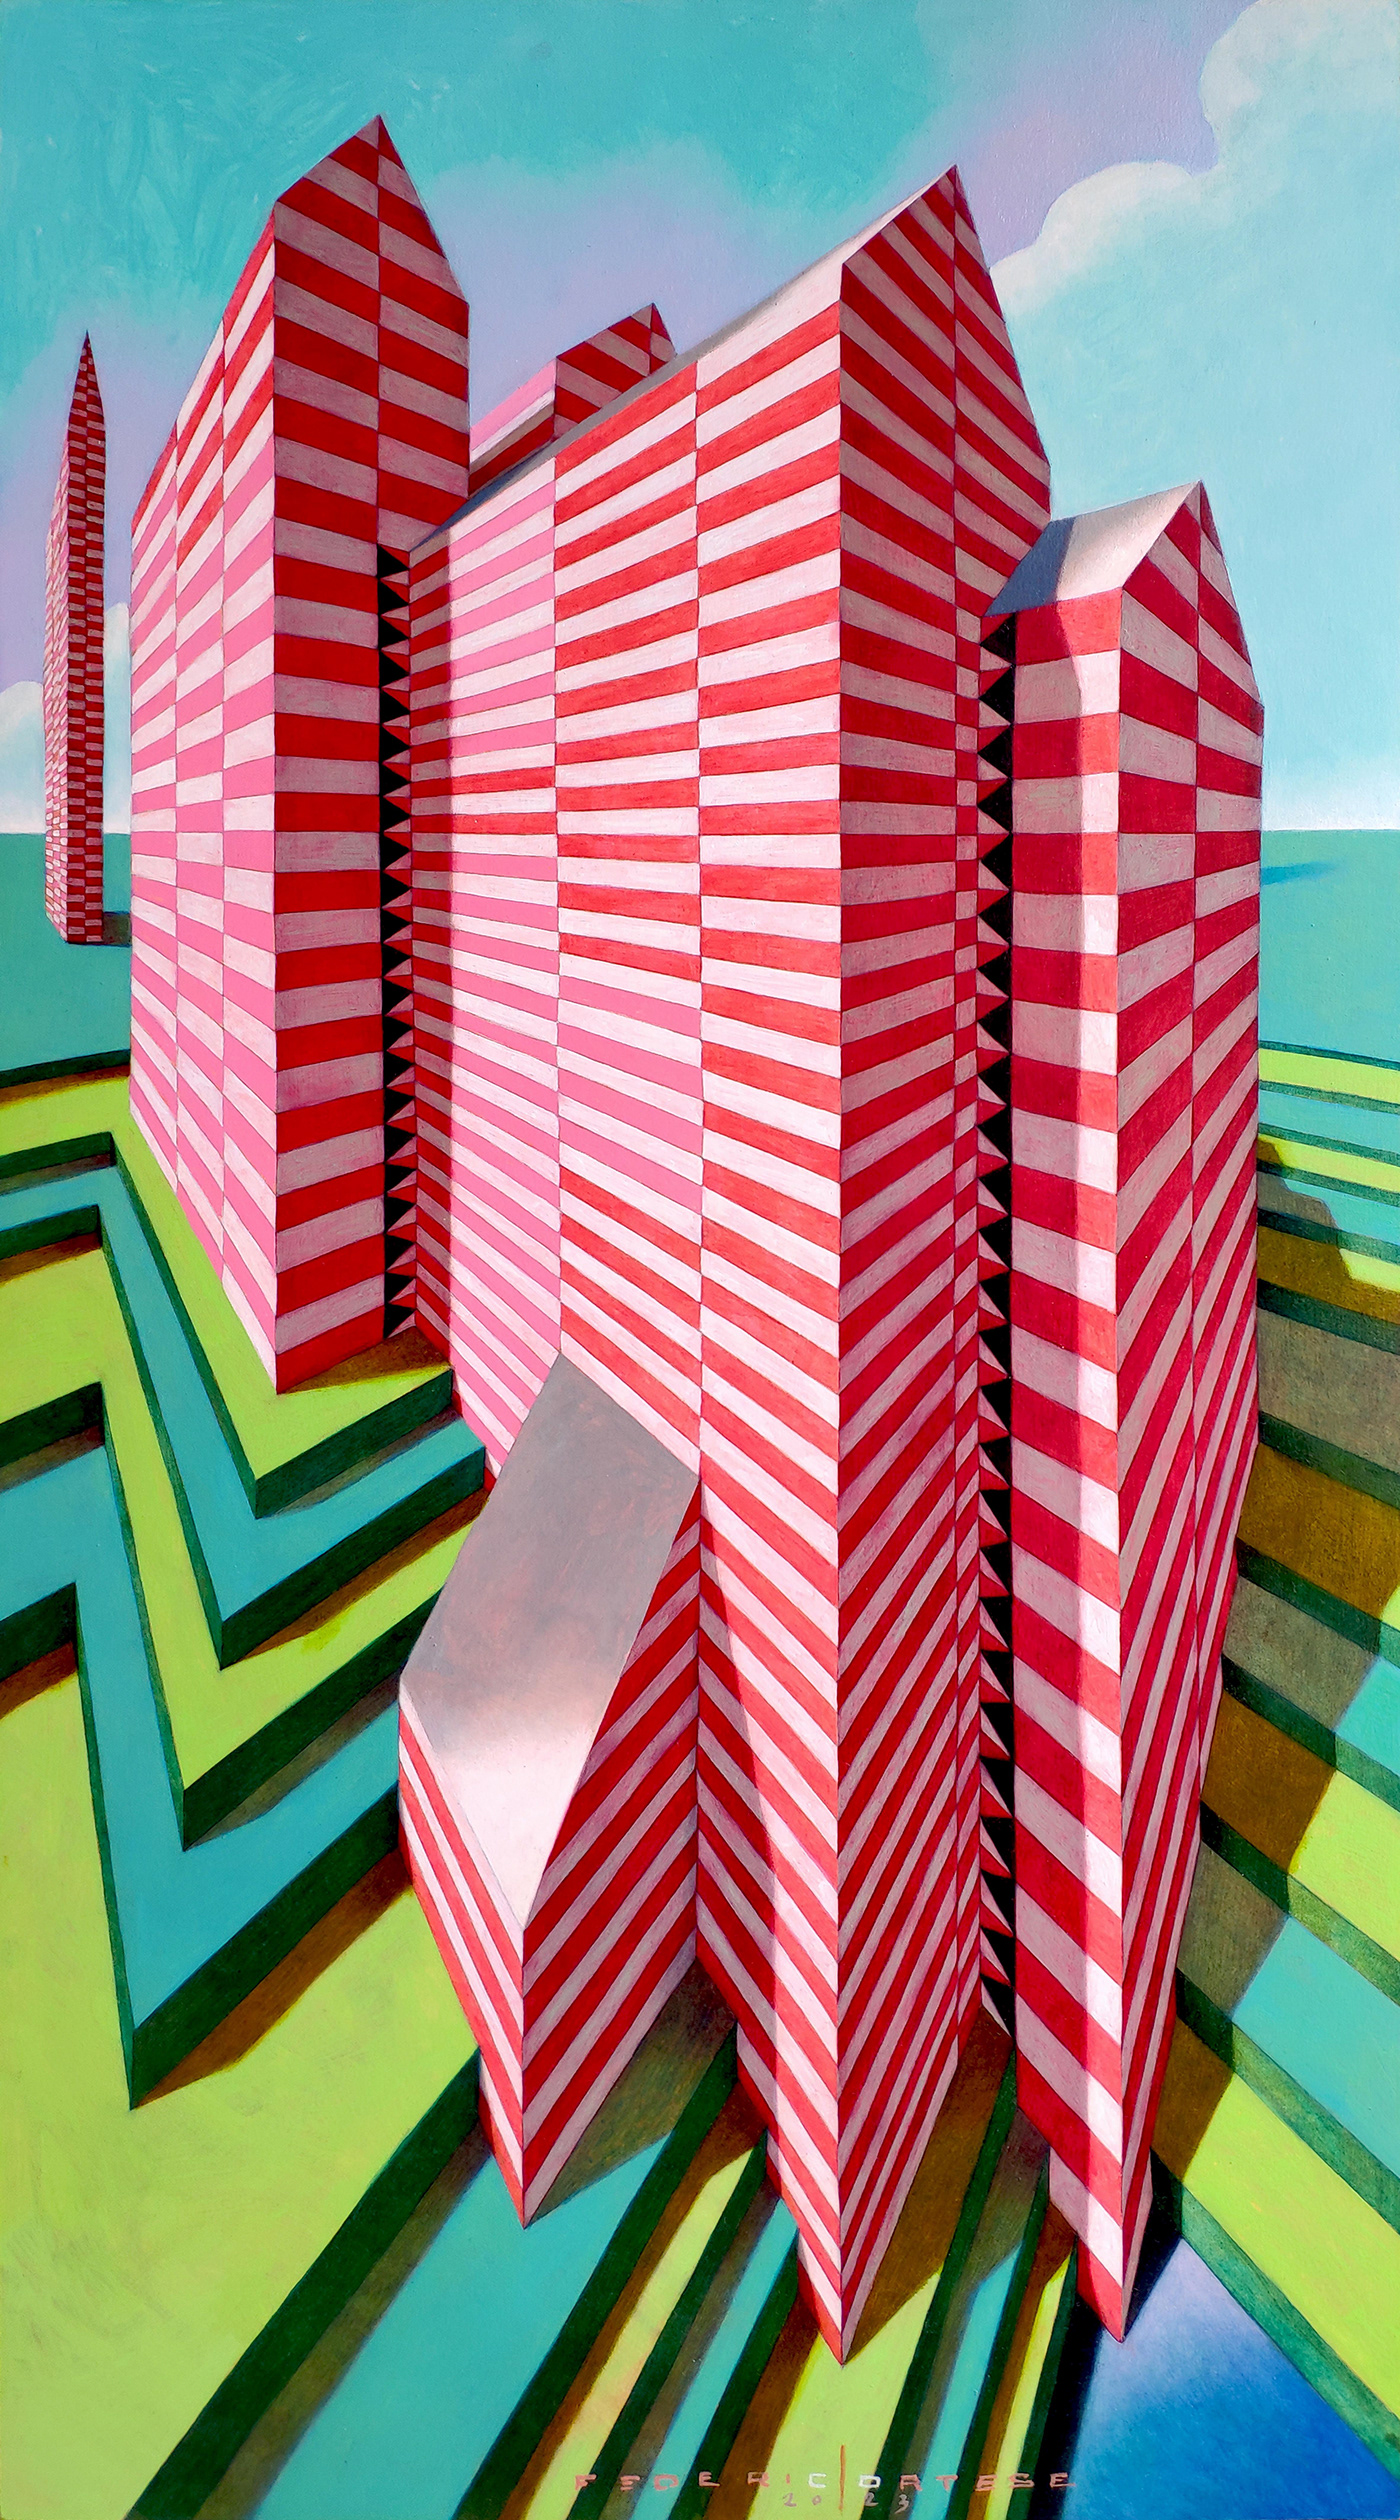 architecture virtual model geometry geometric Geometries Perspective distortion graphic landsape